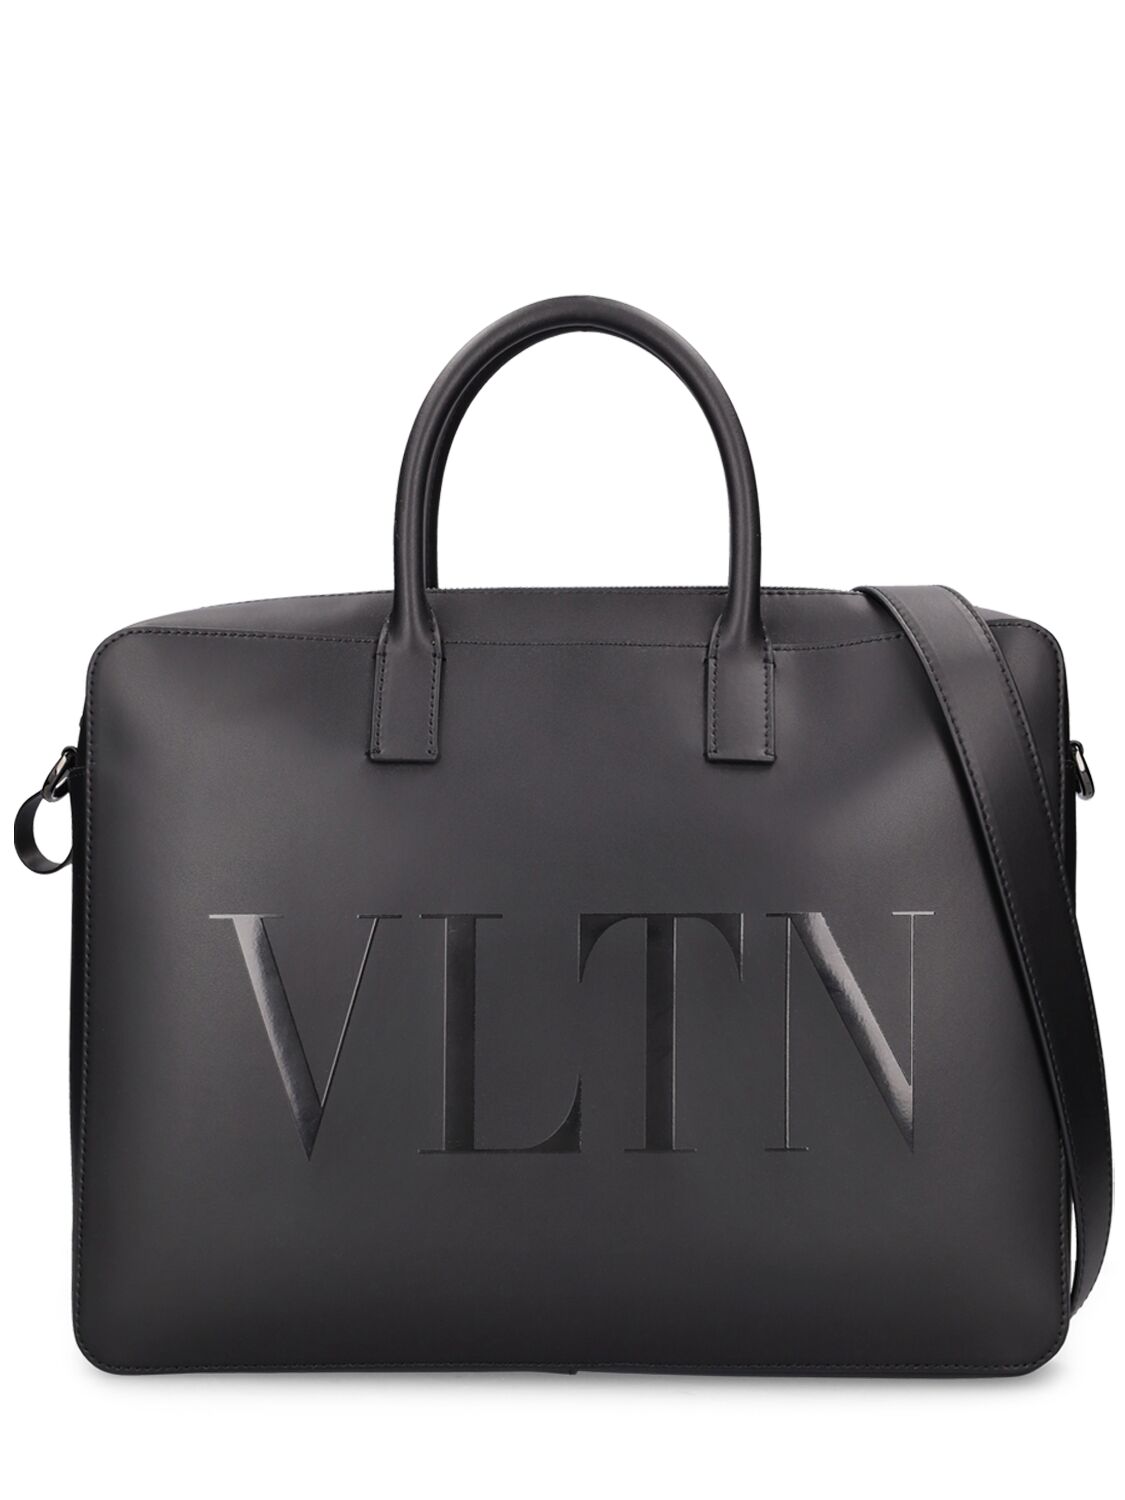 Valentino Garavani Vltn Leather Brief Case In Black